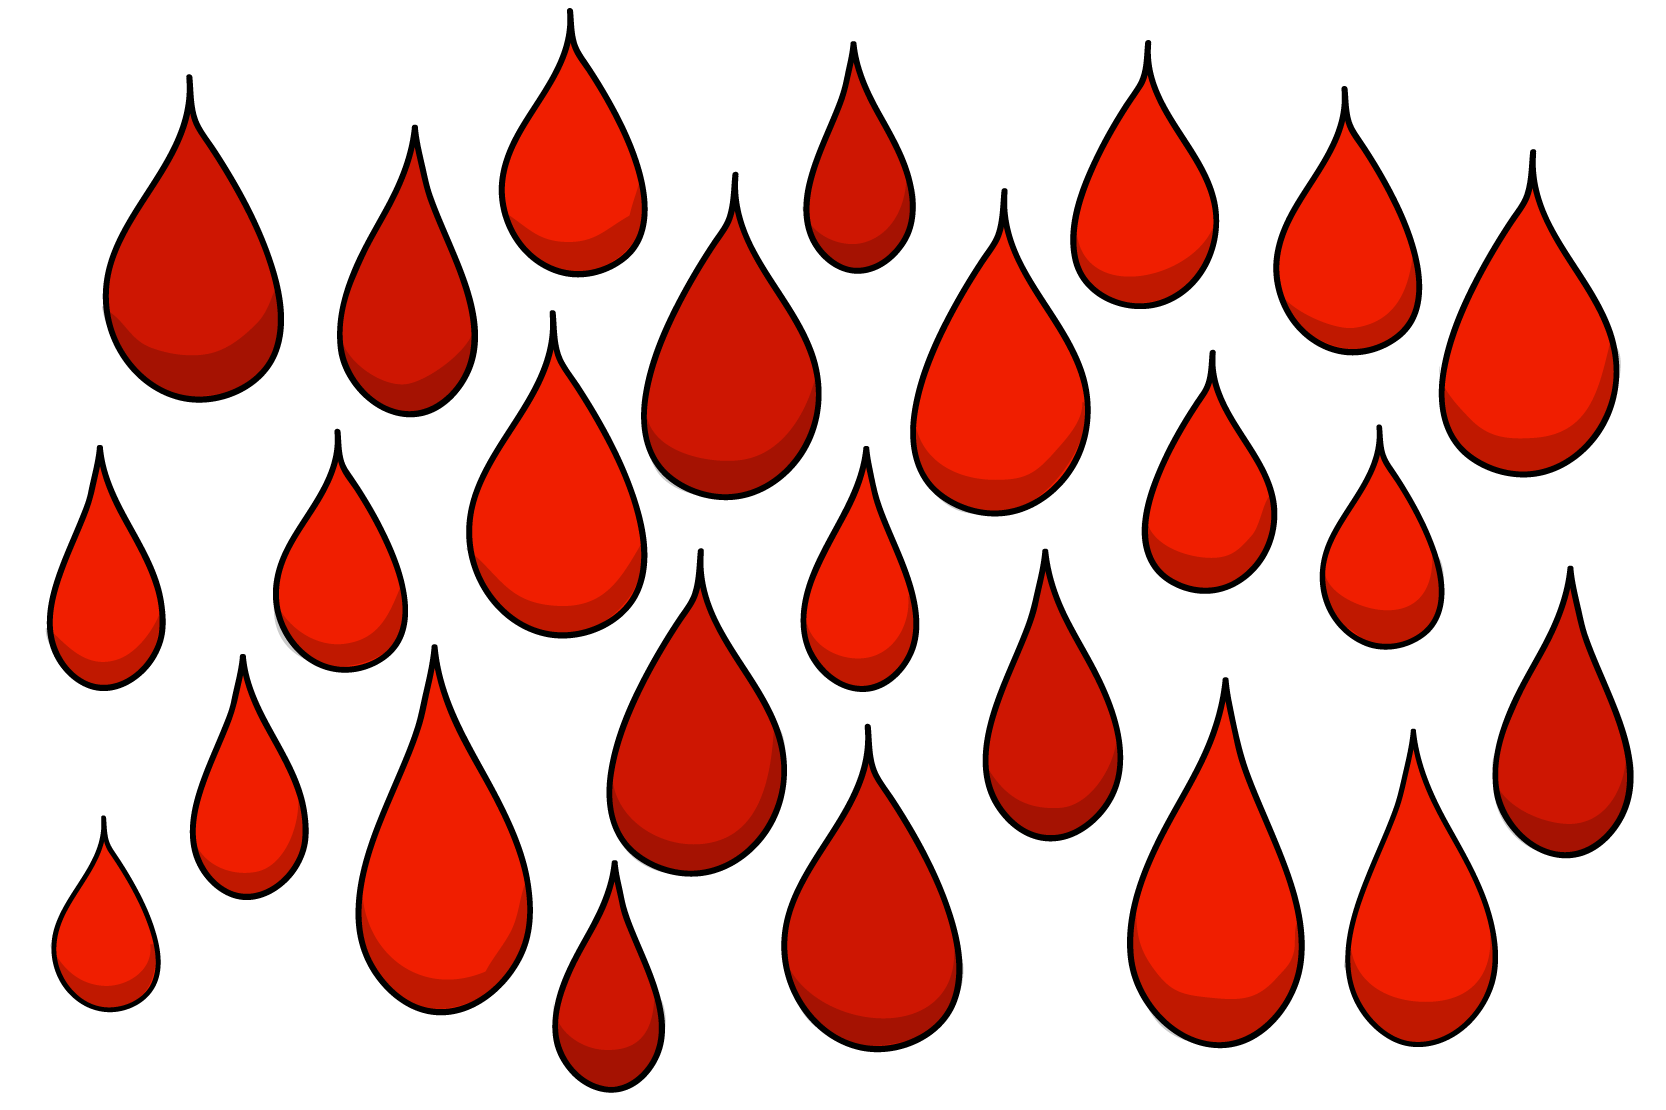 Bloddroppar mot vit bakgrund, illustration.